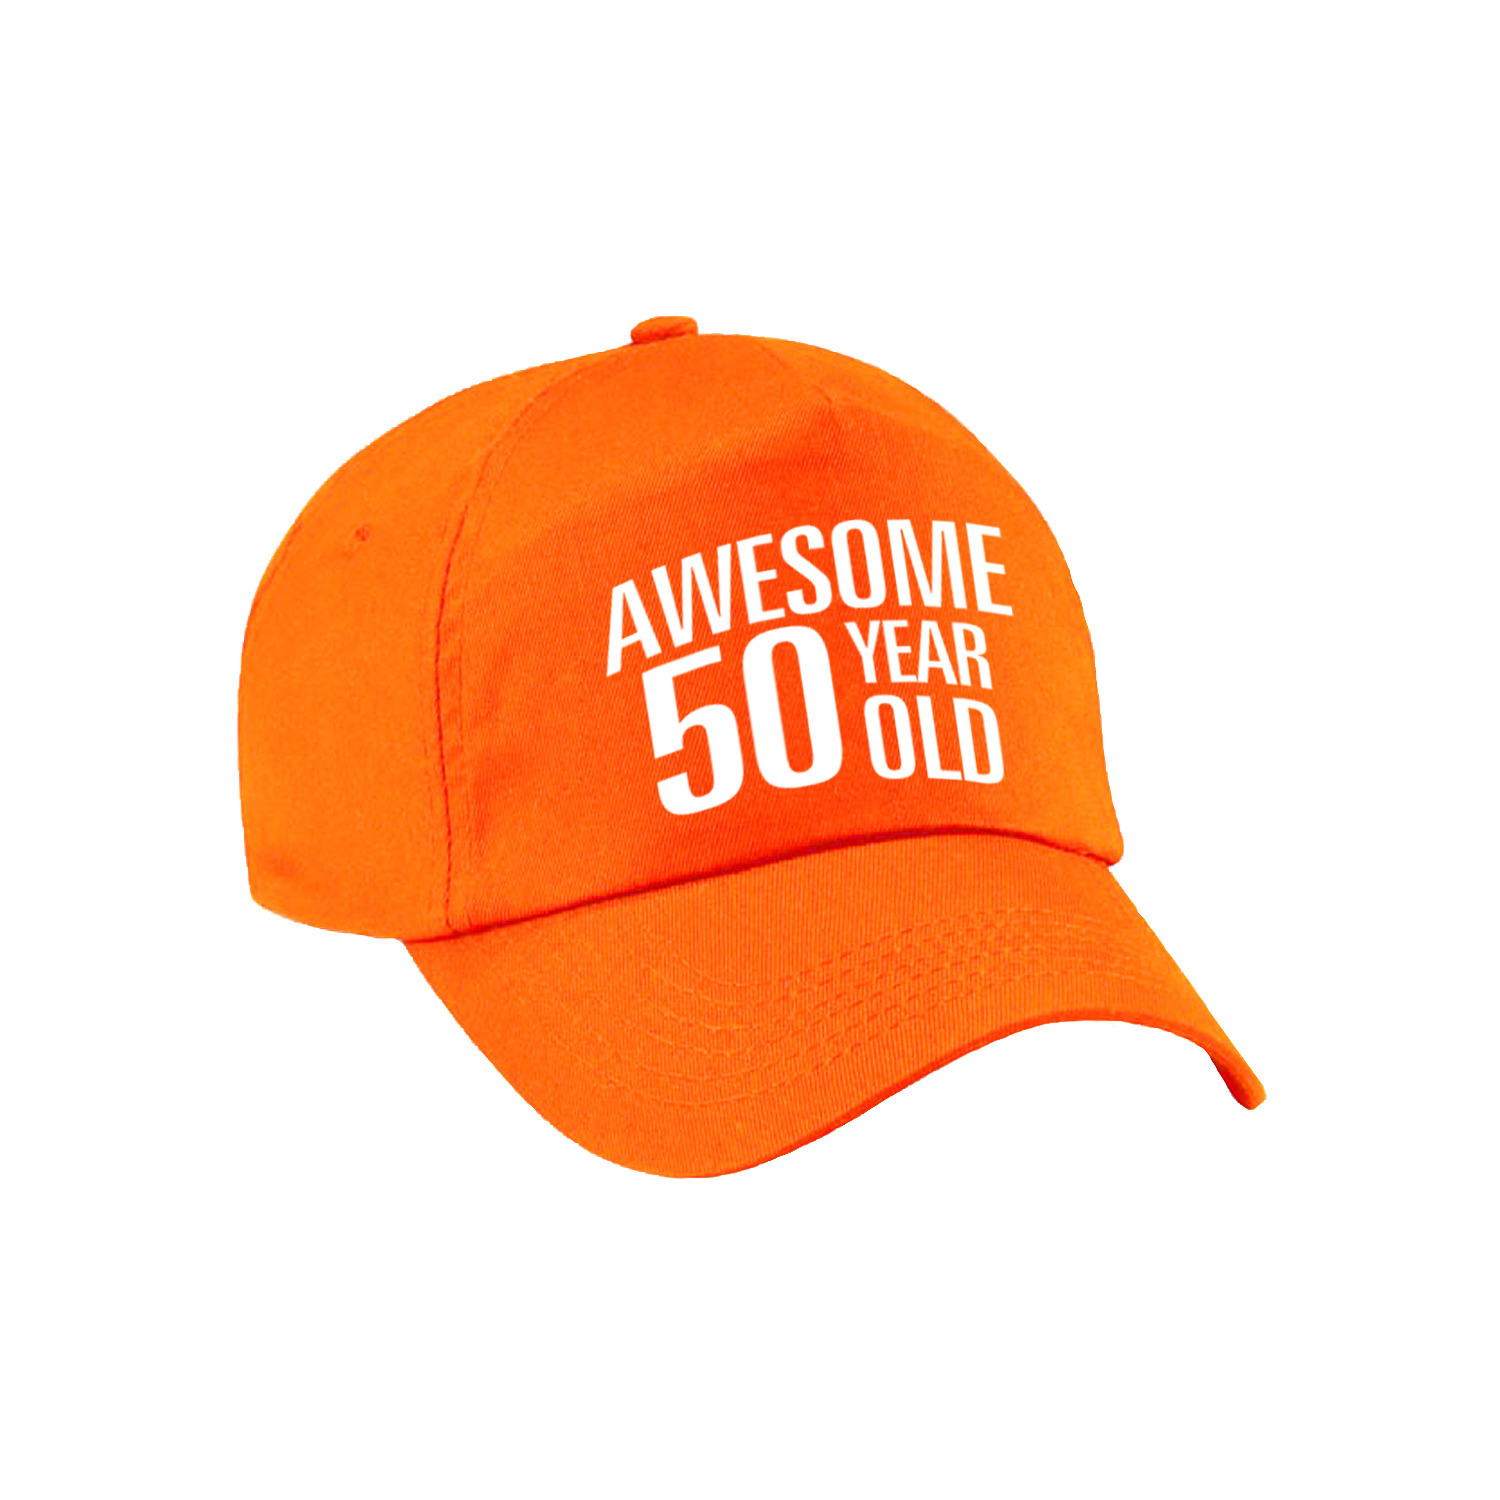 Awesome 50 year old verjaardag pet / cap oranje voor dames en heren